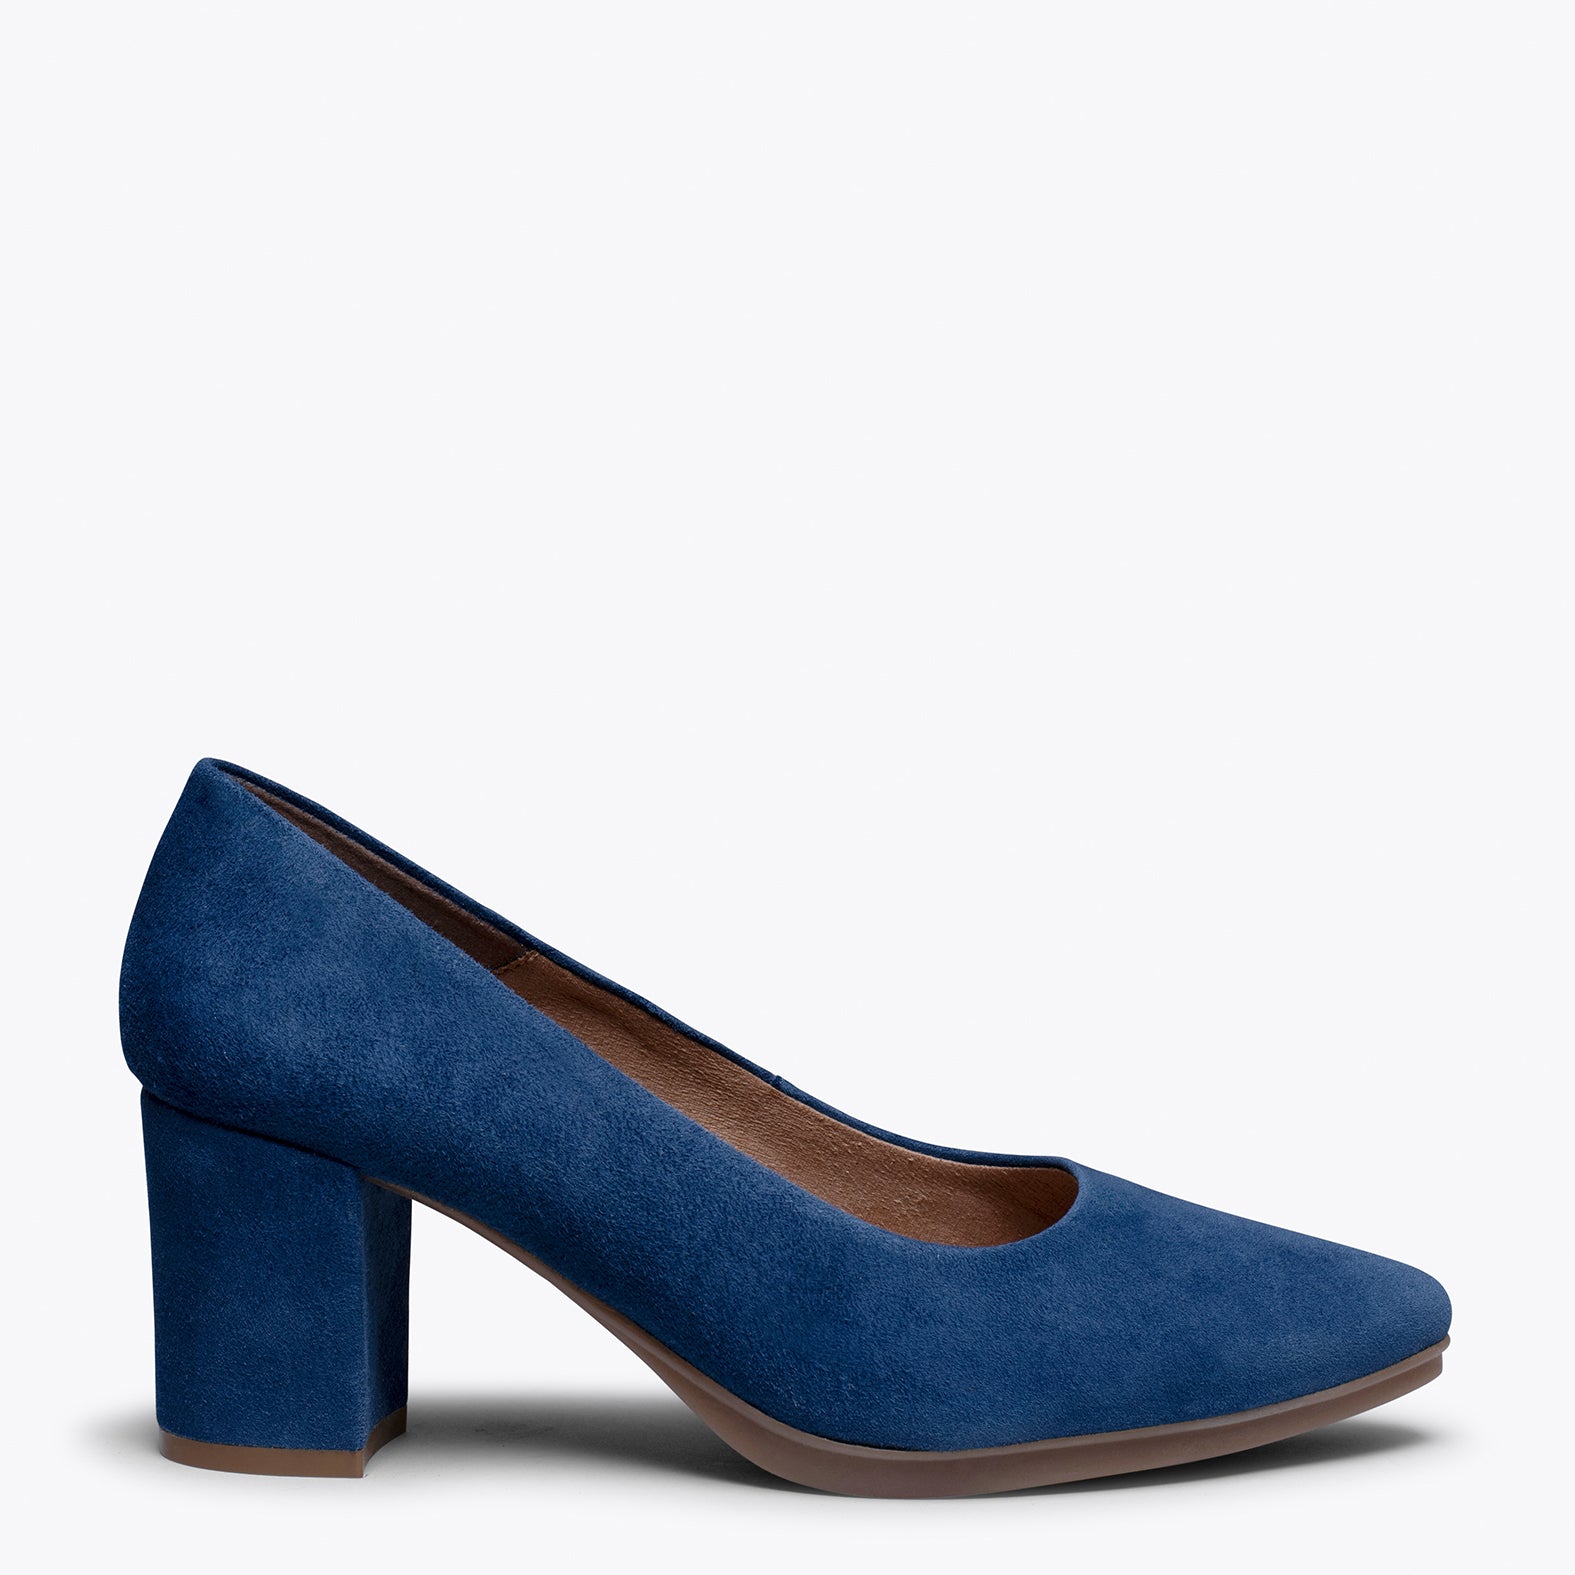 URBAN S - BLUE mid heel